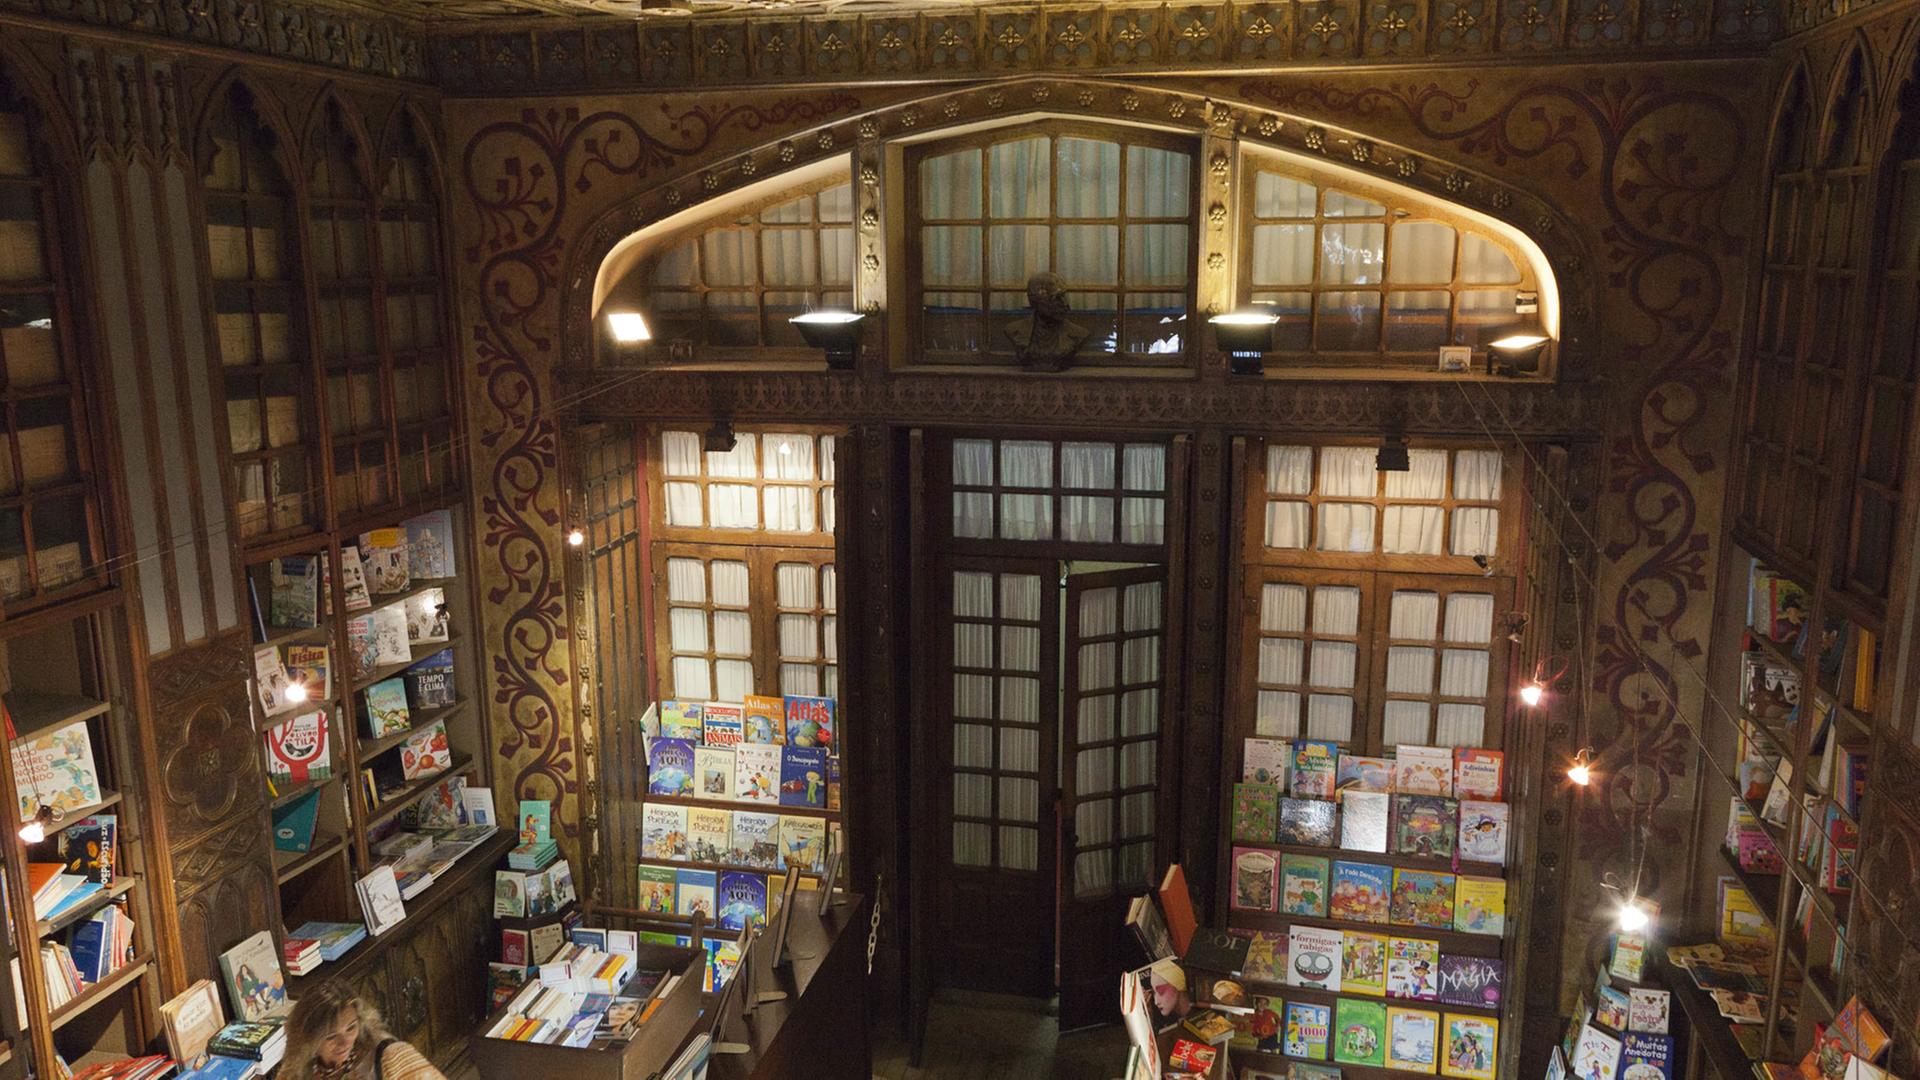 Livraria Lello et Mans in Porto, Buchhandlungen, J.K.Rowling